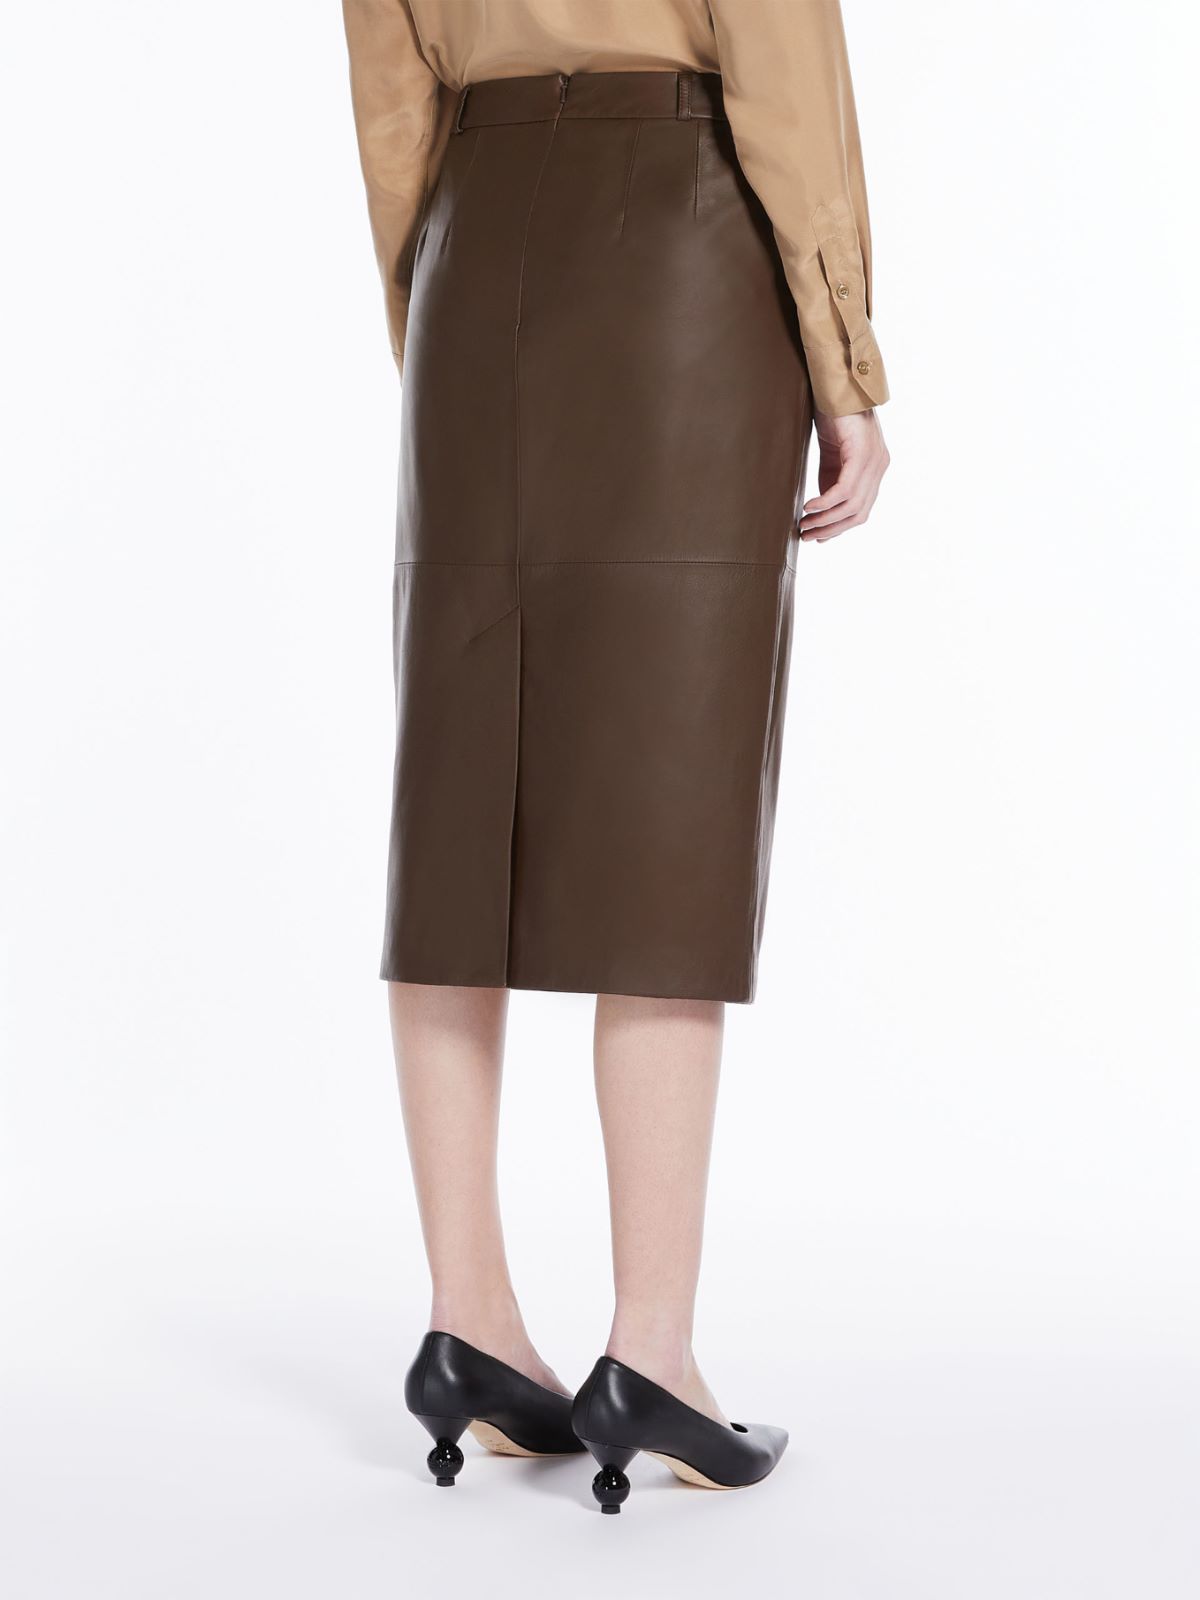 Nappa leather pencil skirt - CHOCOLATE - Weekend Max Mara - 3